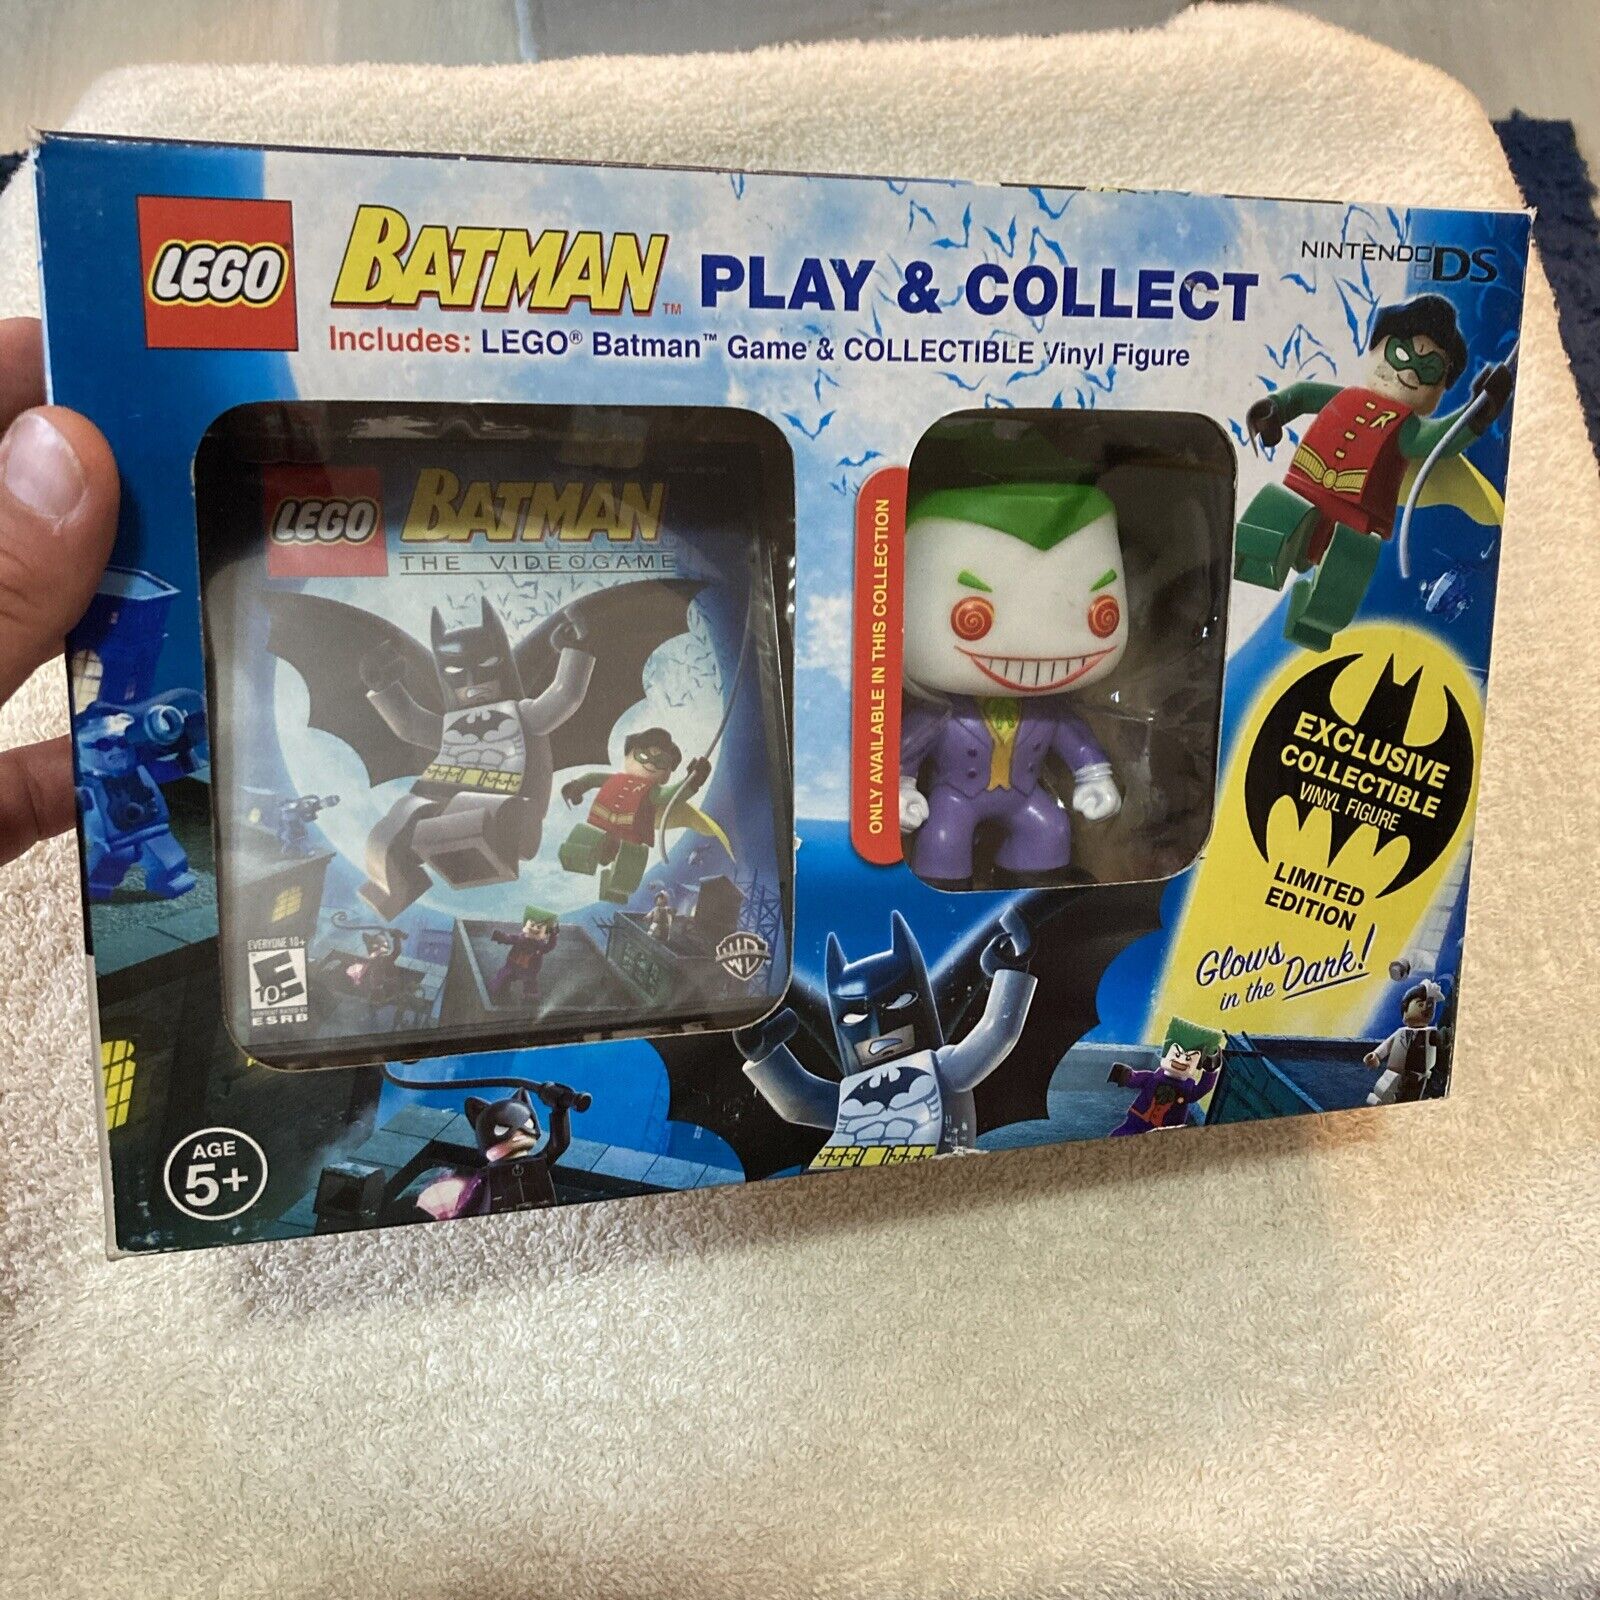 LEGO BATMAN PLAY & COLLECT NINTENDO DS FUNKO LIMITED EDITION GITD JOKER FIGURE 